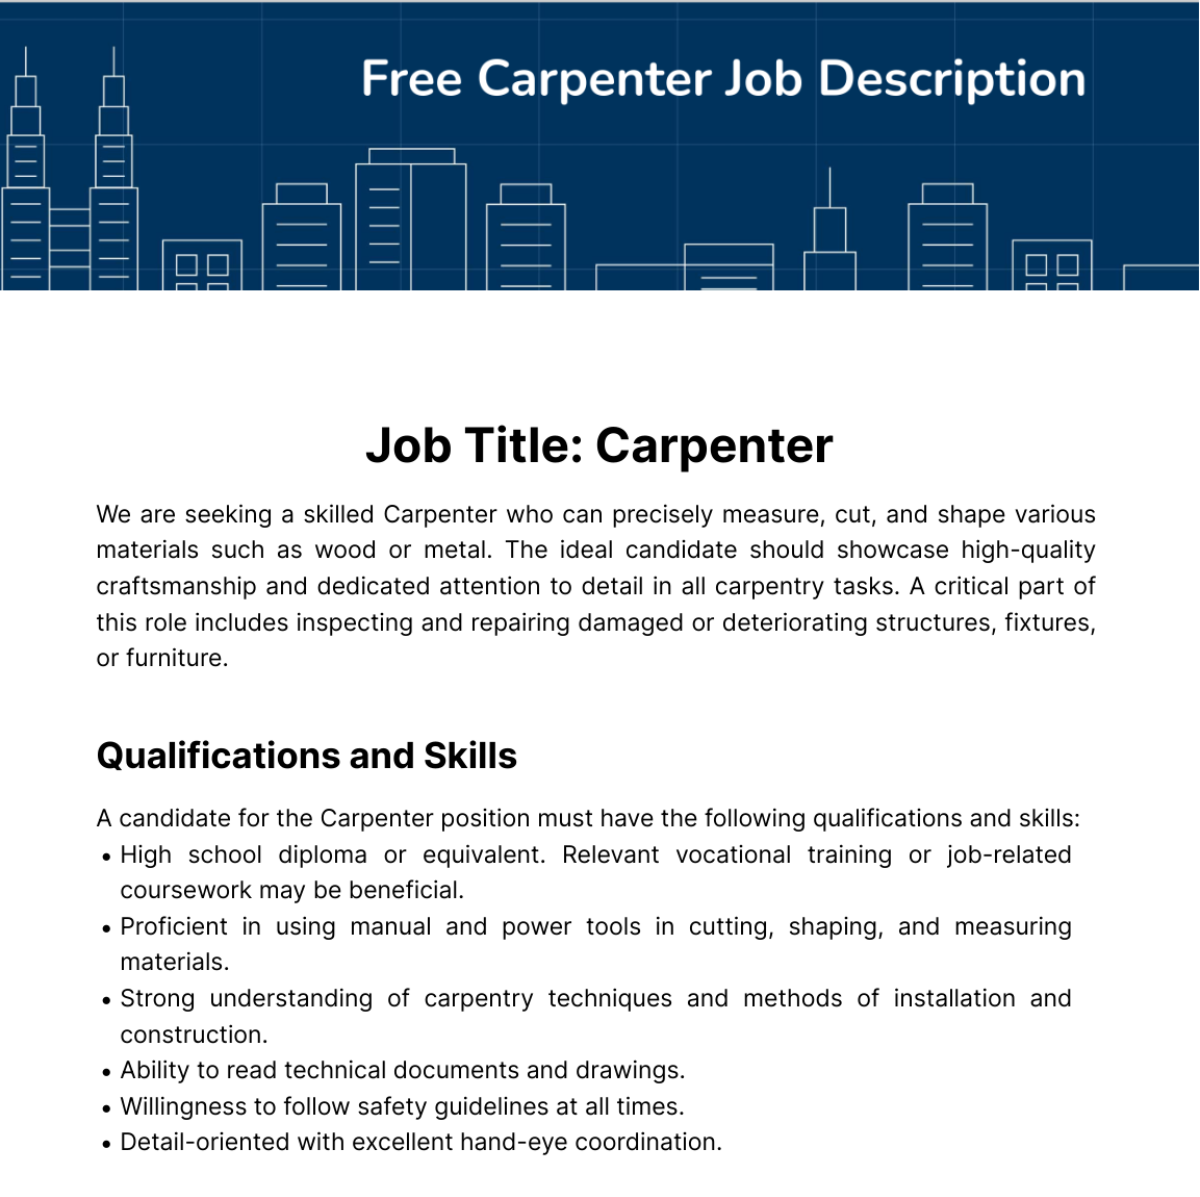 Free Carpenter Job Description Template